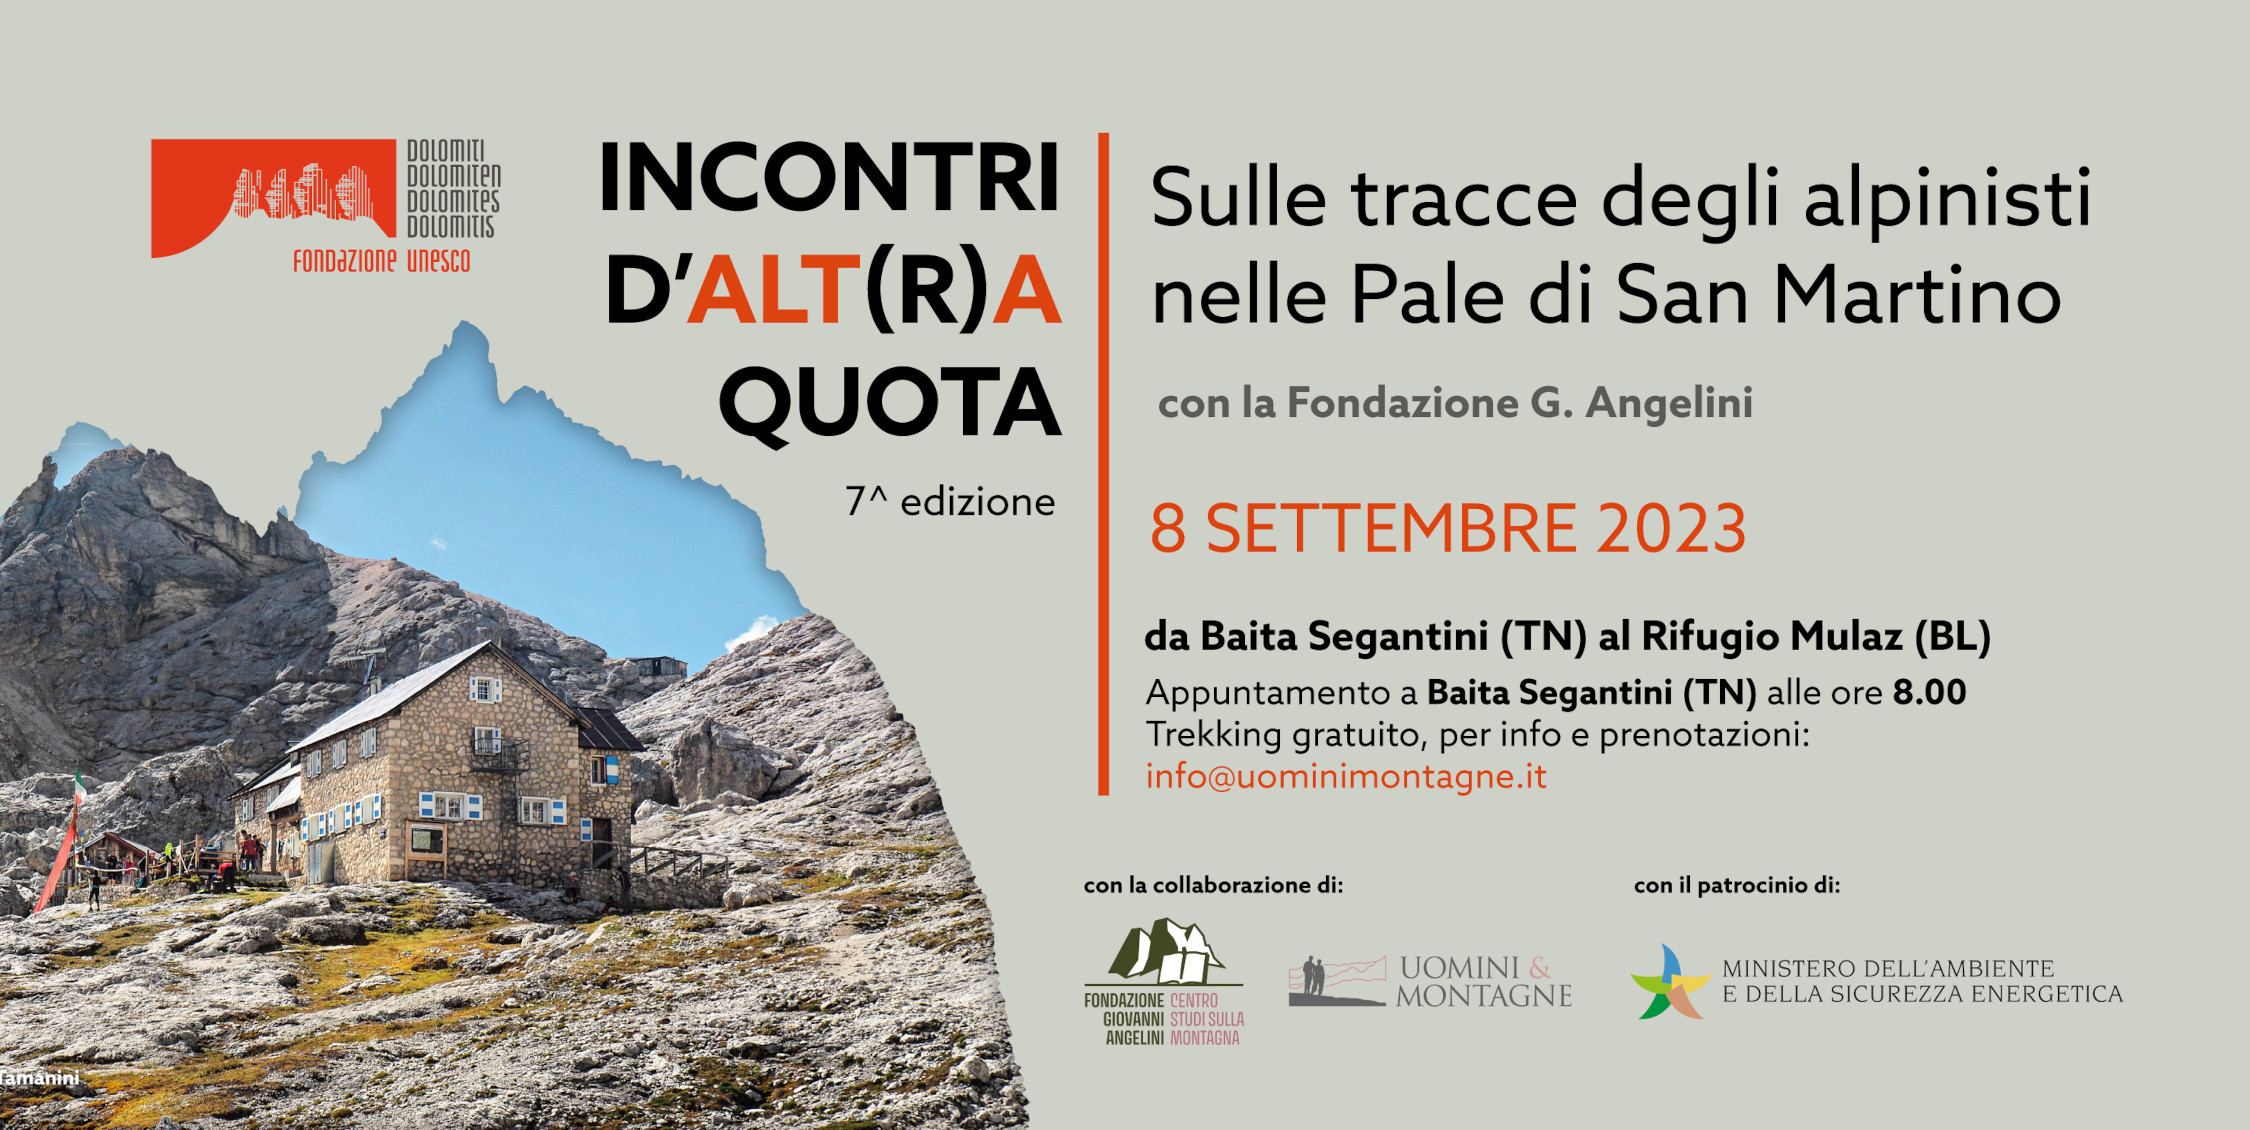 8 settembre trekking al Rifugio Mulaz per Incontri d'Alt(r)a Quota